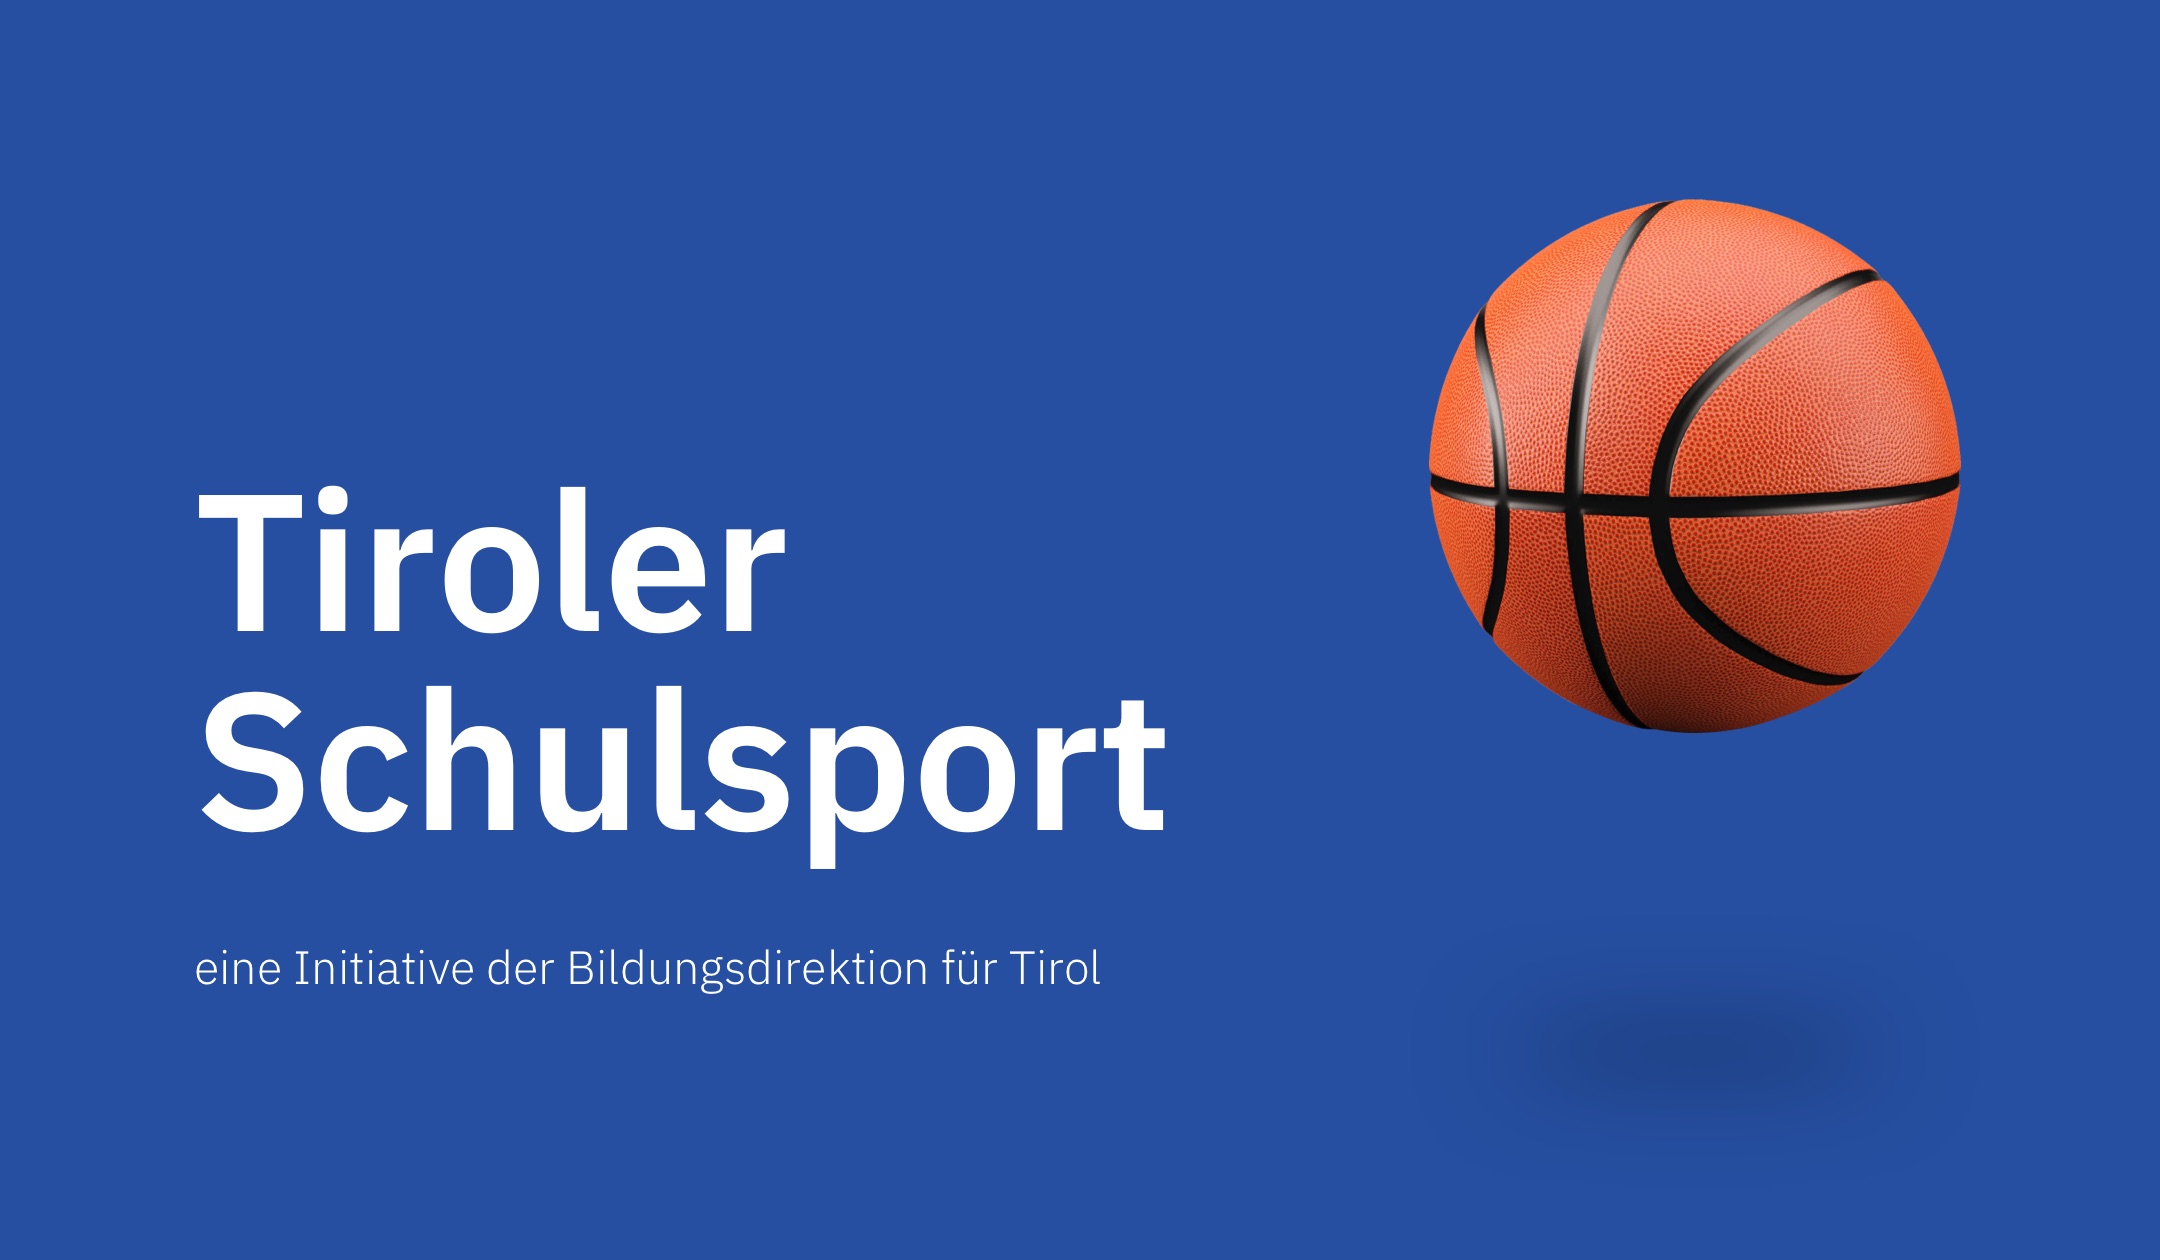 (c) Tiroler-schulsport.at